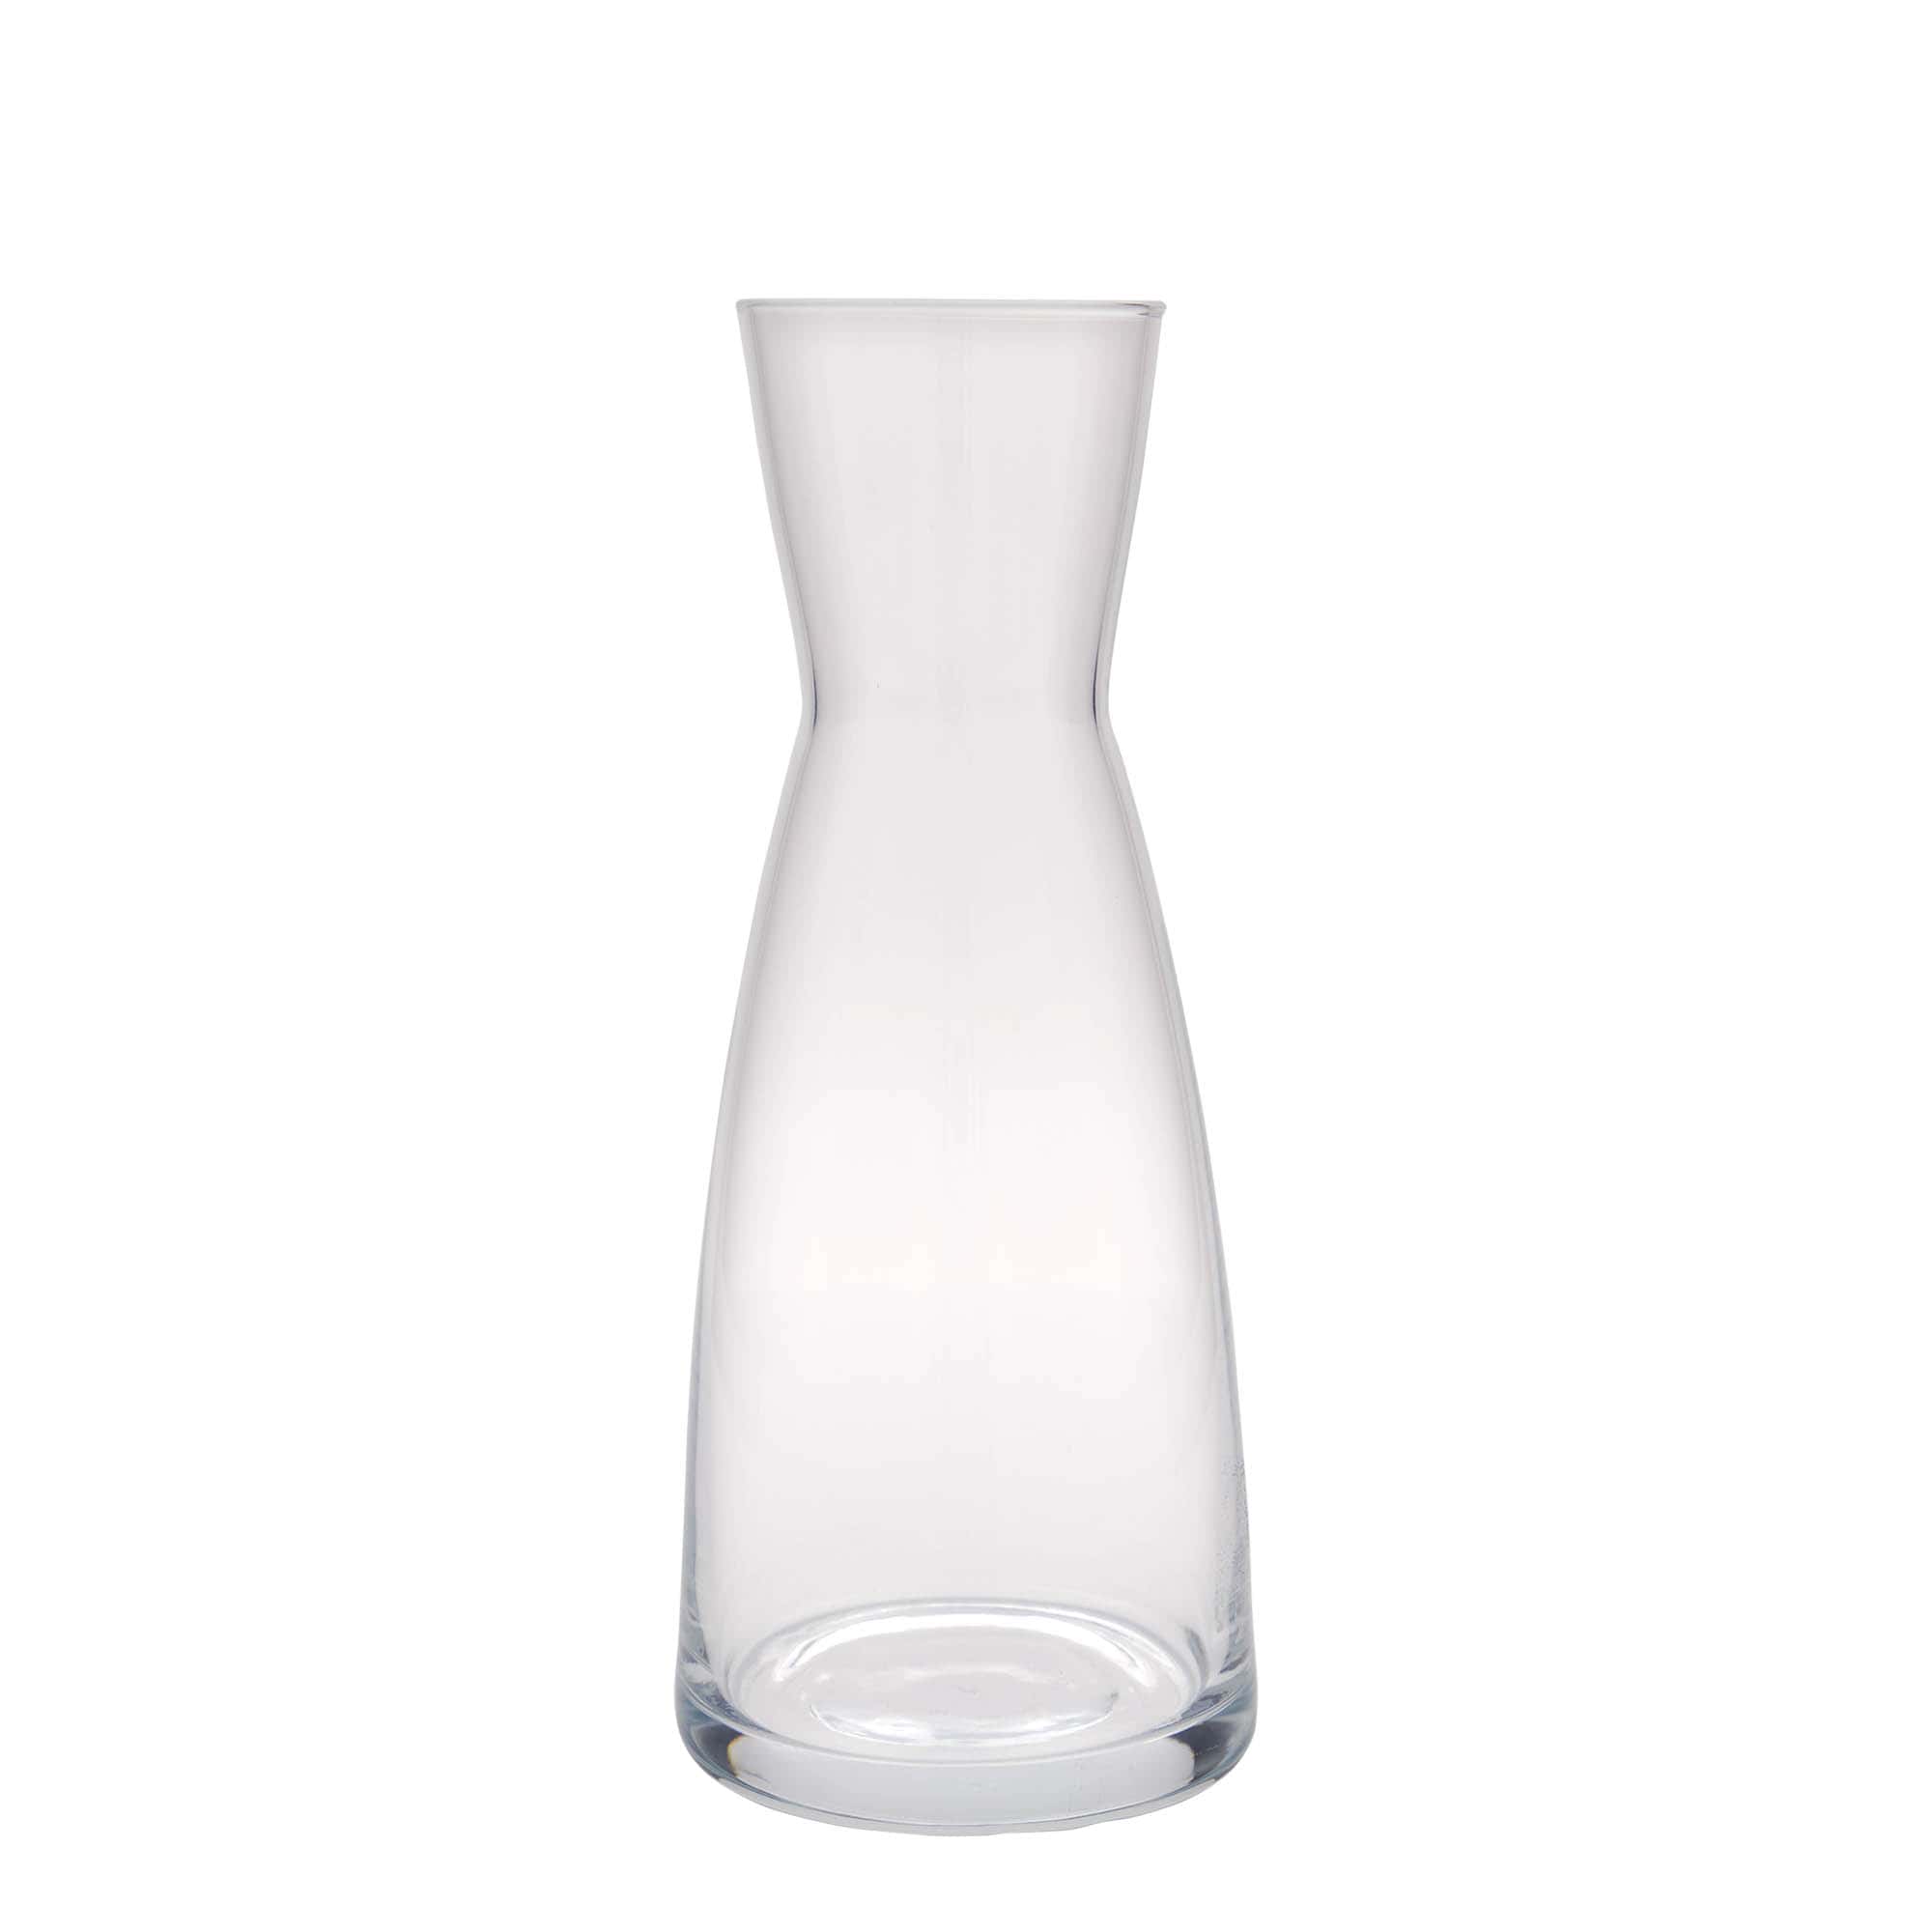 1,000 ml carafe 'Ypsilon', glass